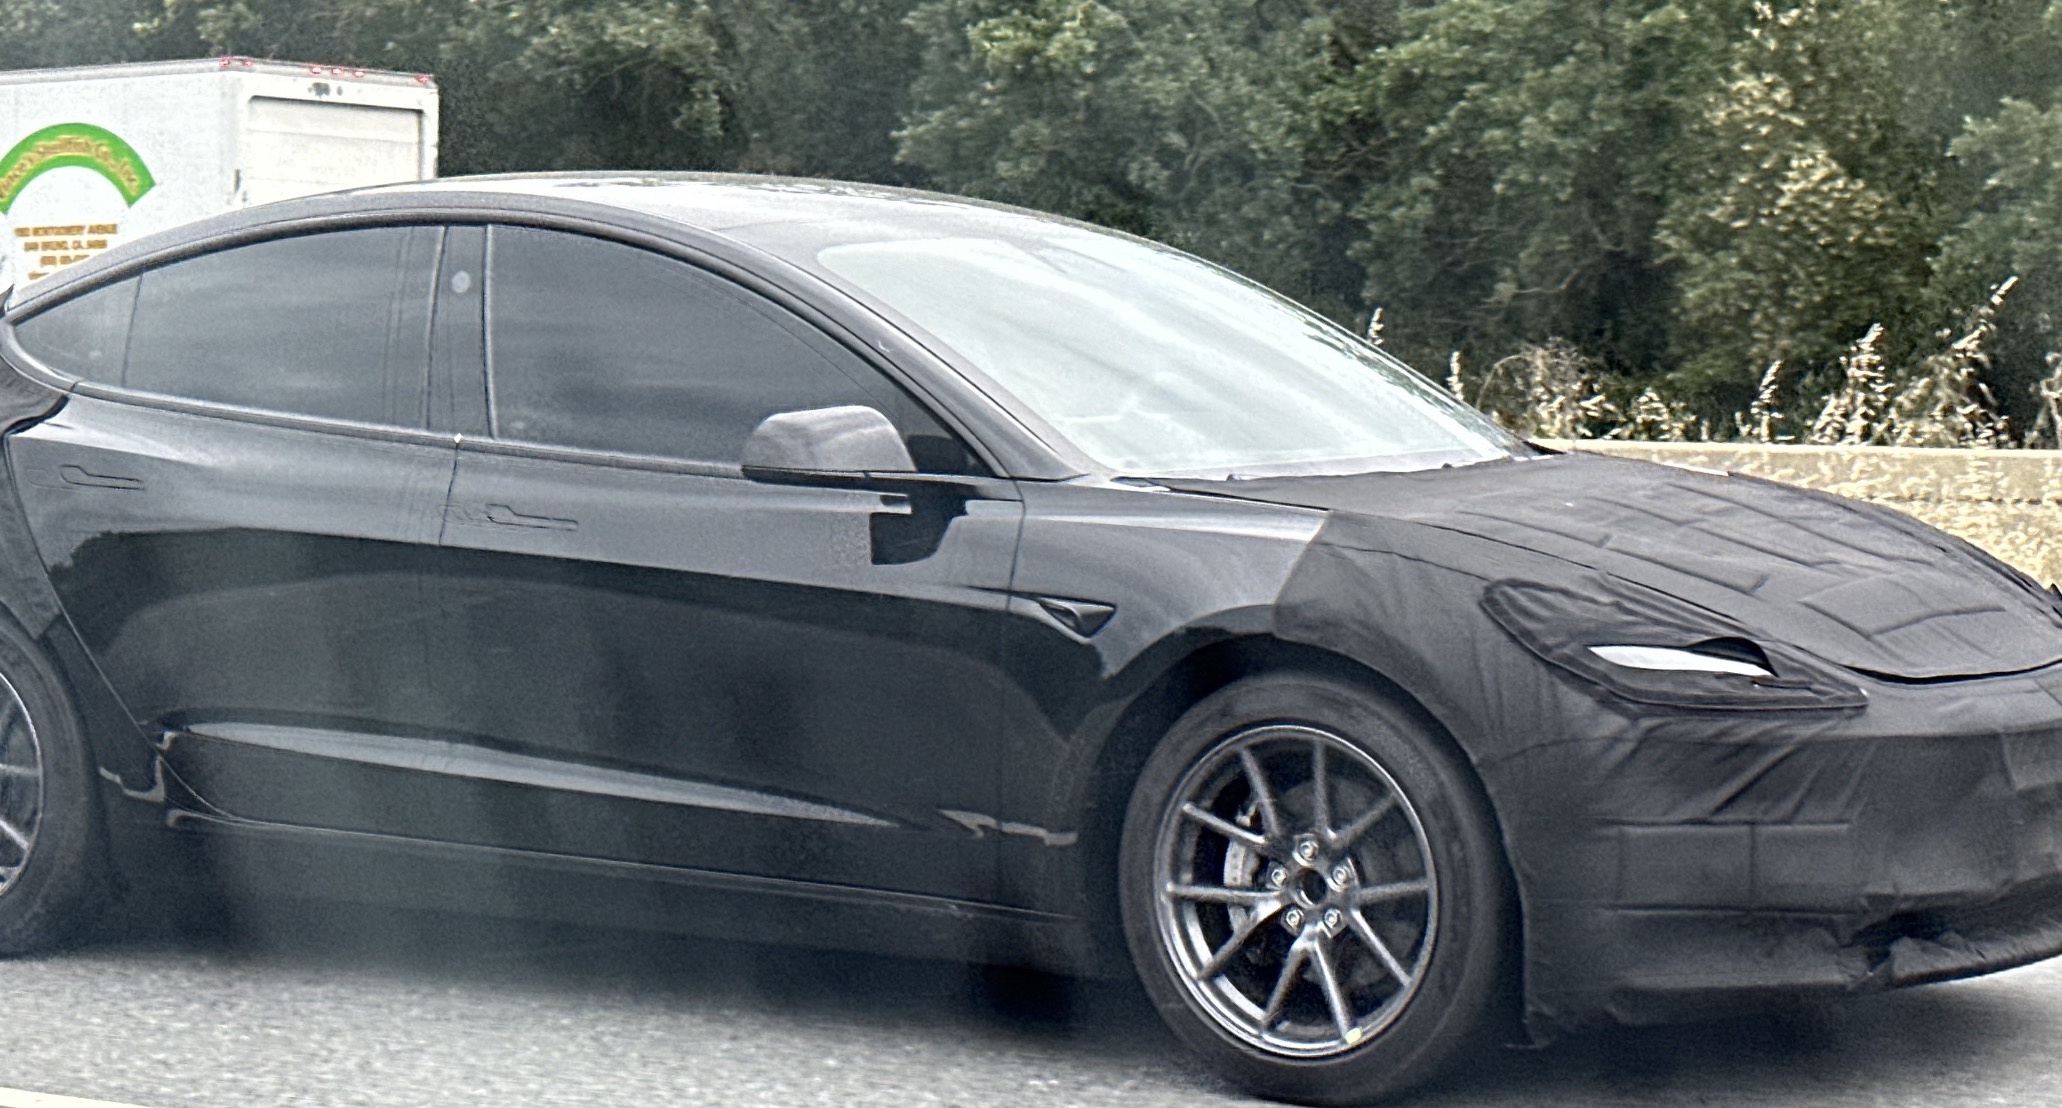 Tesla Model 3 (Highland) test drive: Making a good first